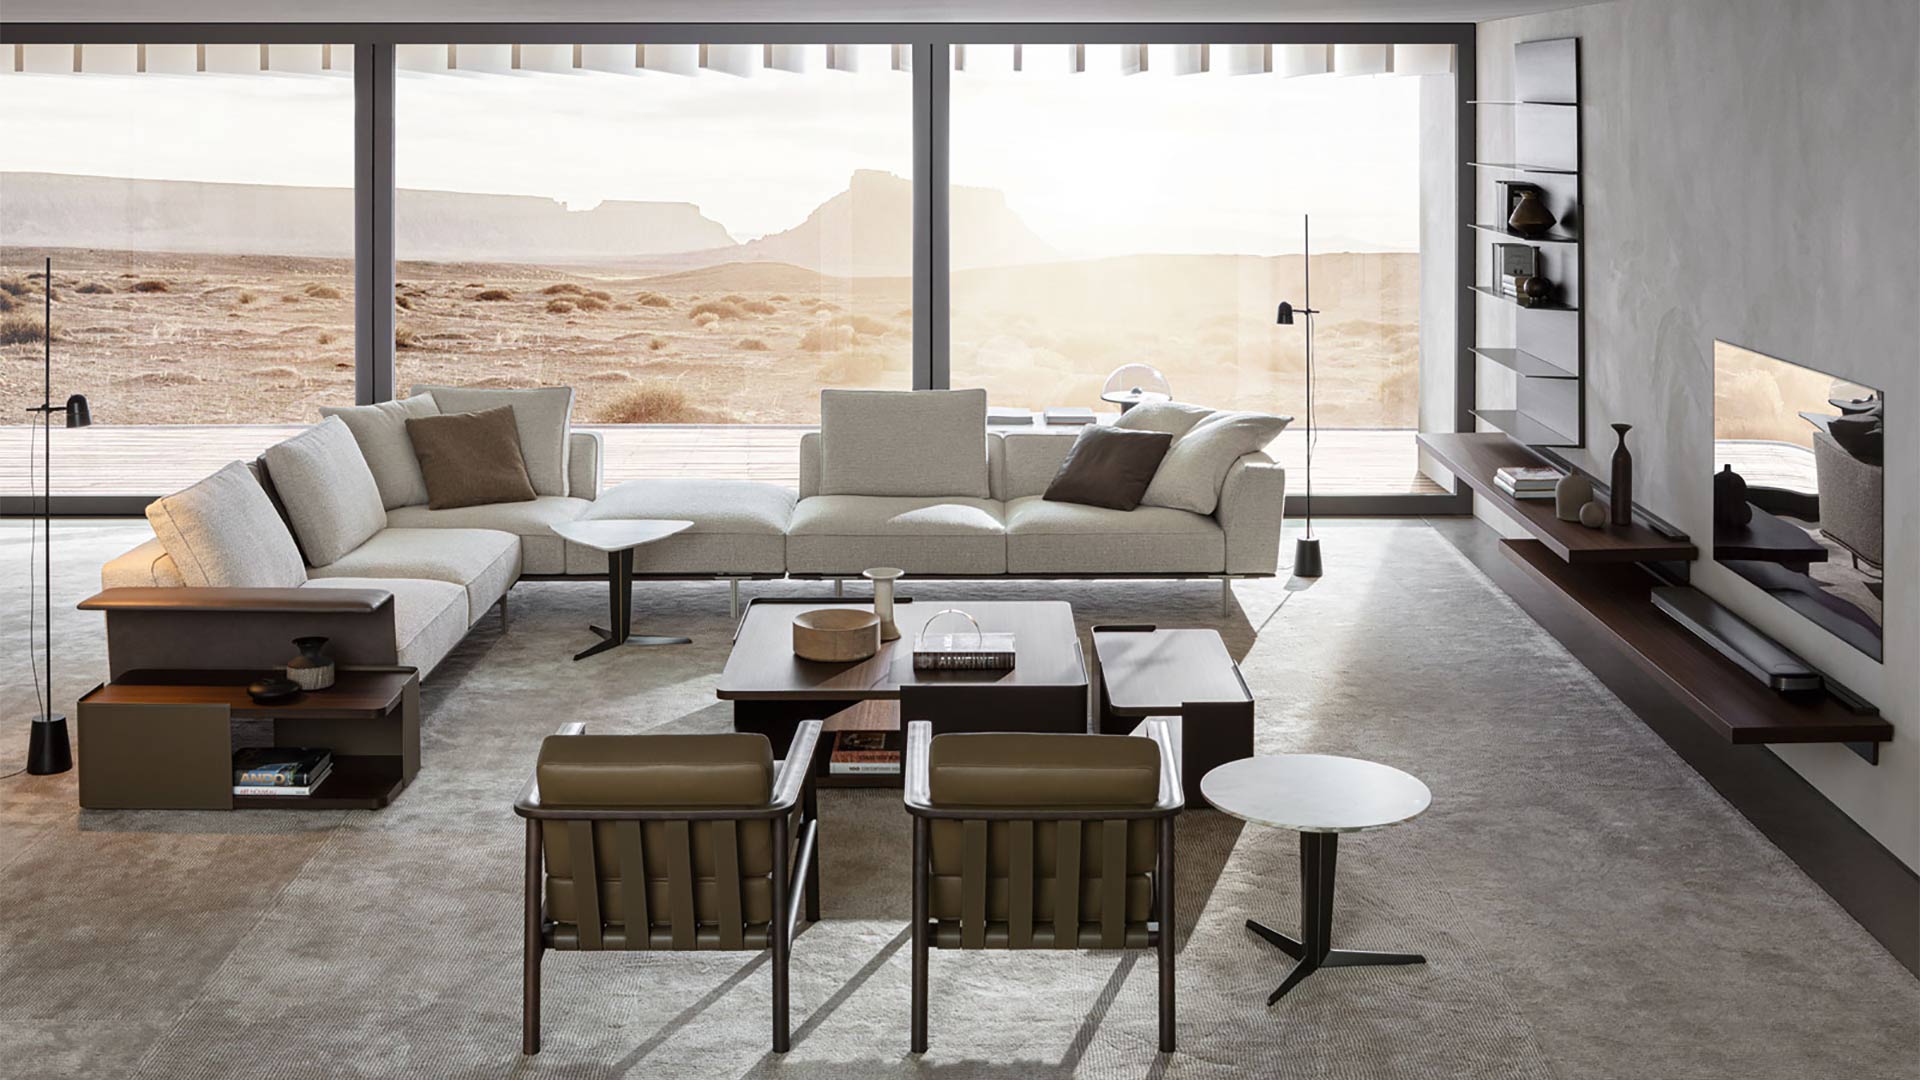 Dealers - Arredo Staff Agency - Italian Design Furniture - Molteni & C, Dada, Veneta Cucine